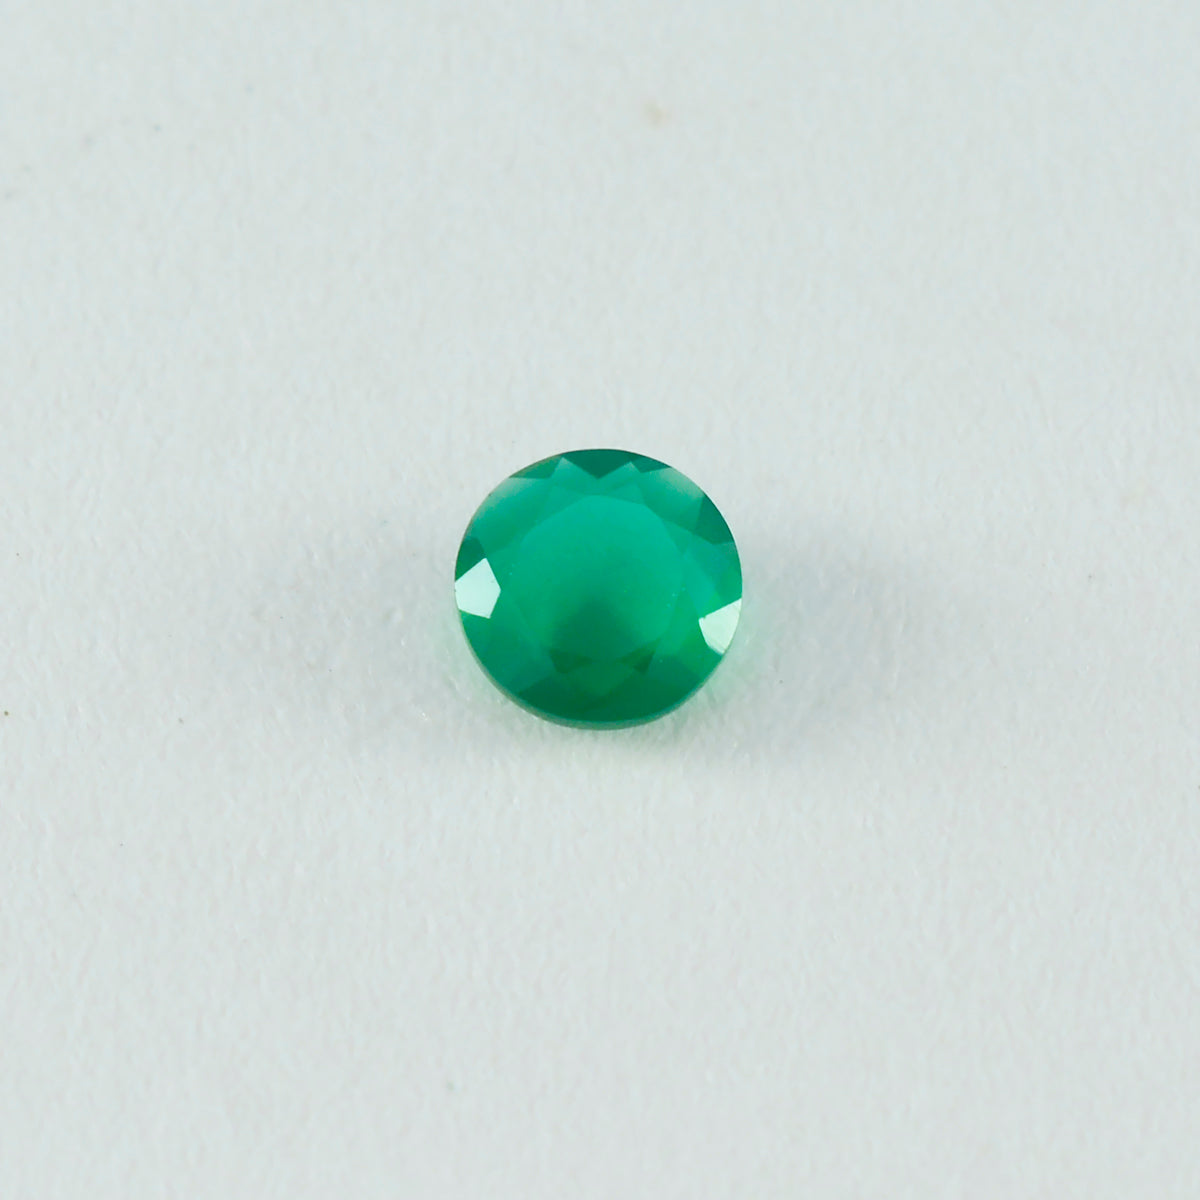 riyogems 1 pz diaspro verde naturale sfaccettato 4x4 mm forma rotonda pietra di bella qualità